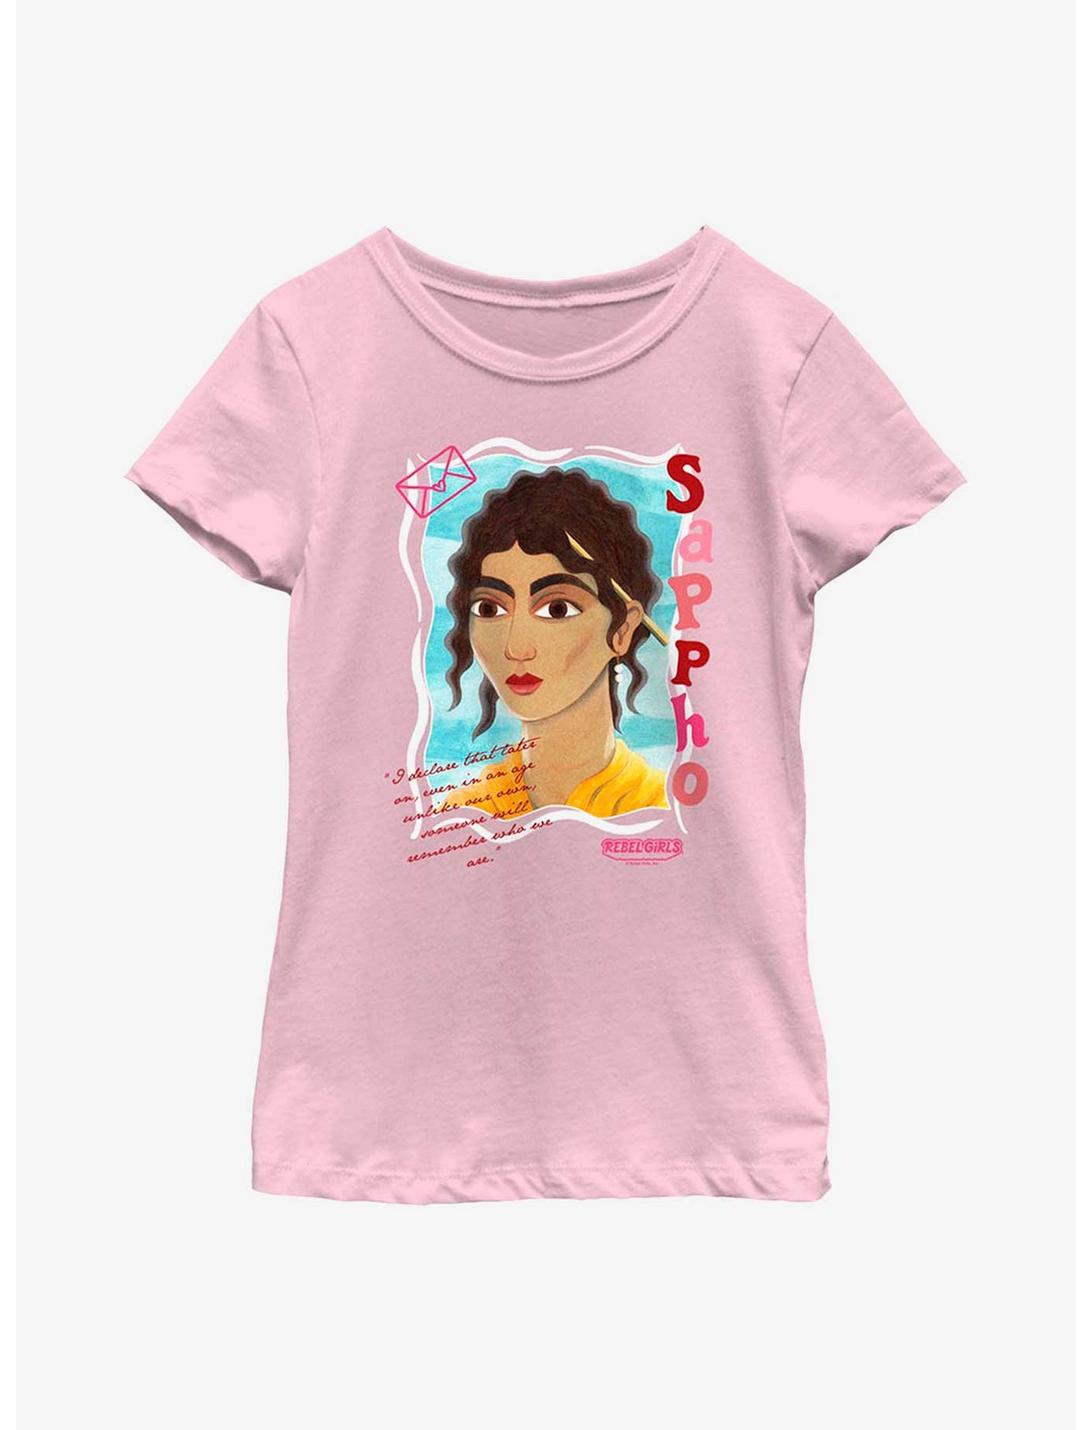 Rebel Girls Poet Sappho Youth Girls T-Shirt, PINK, hi-res